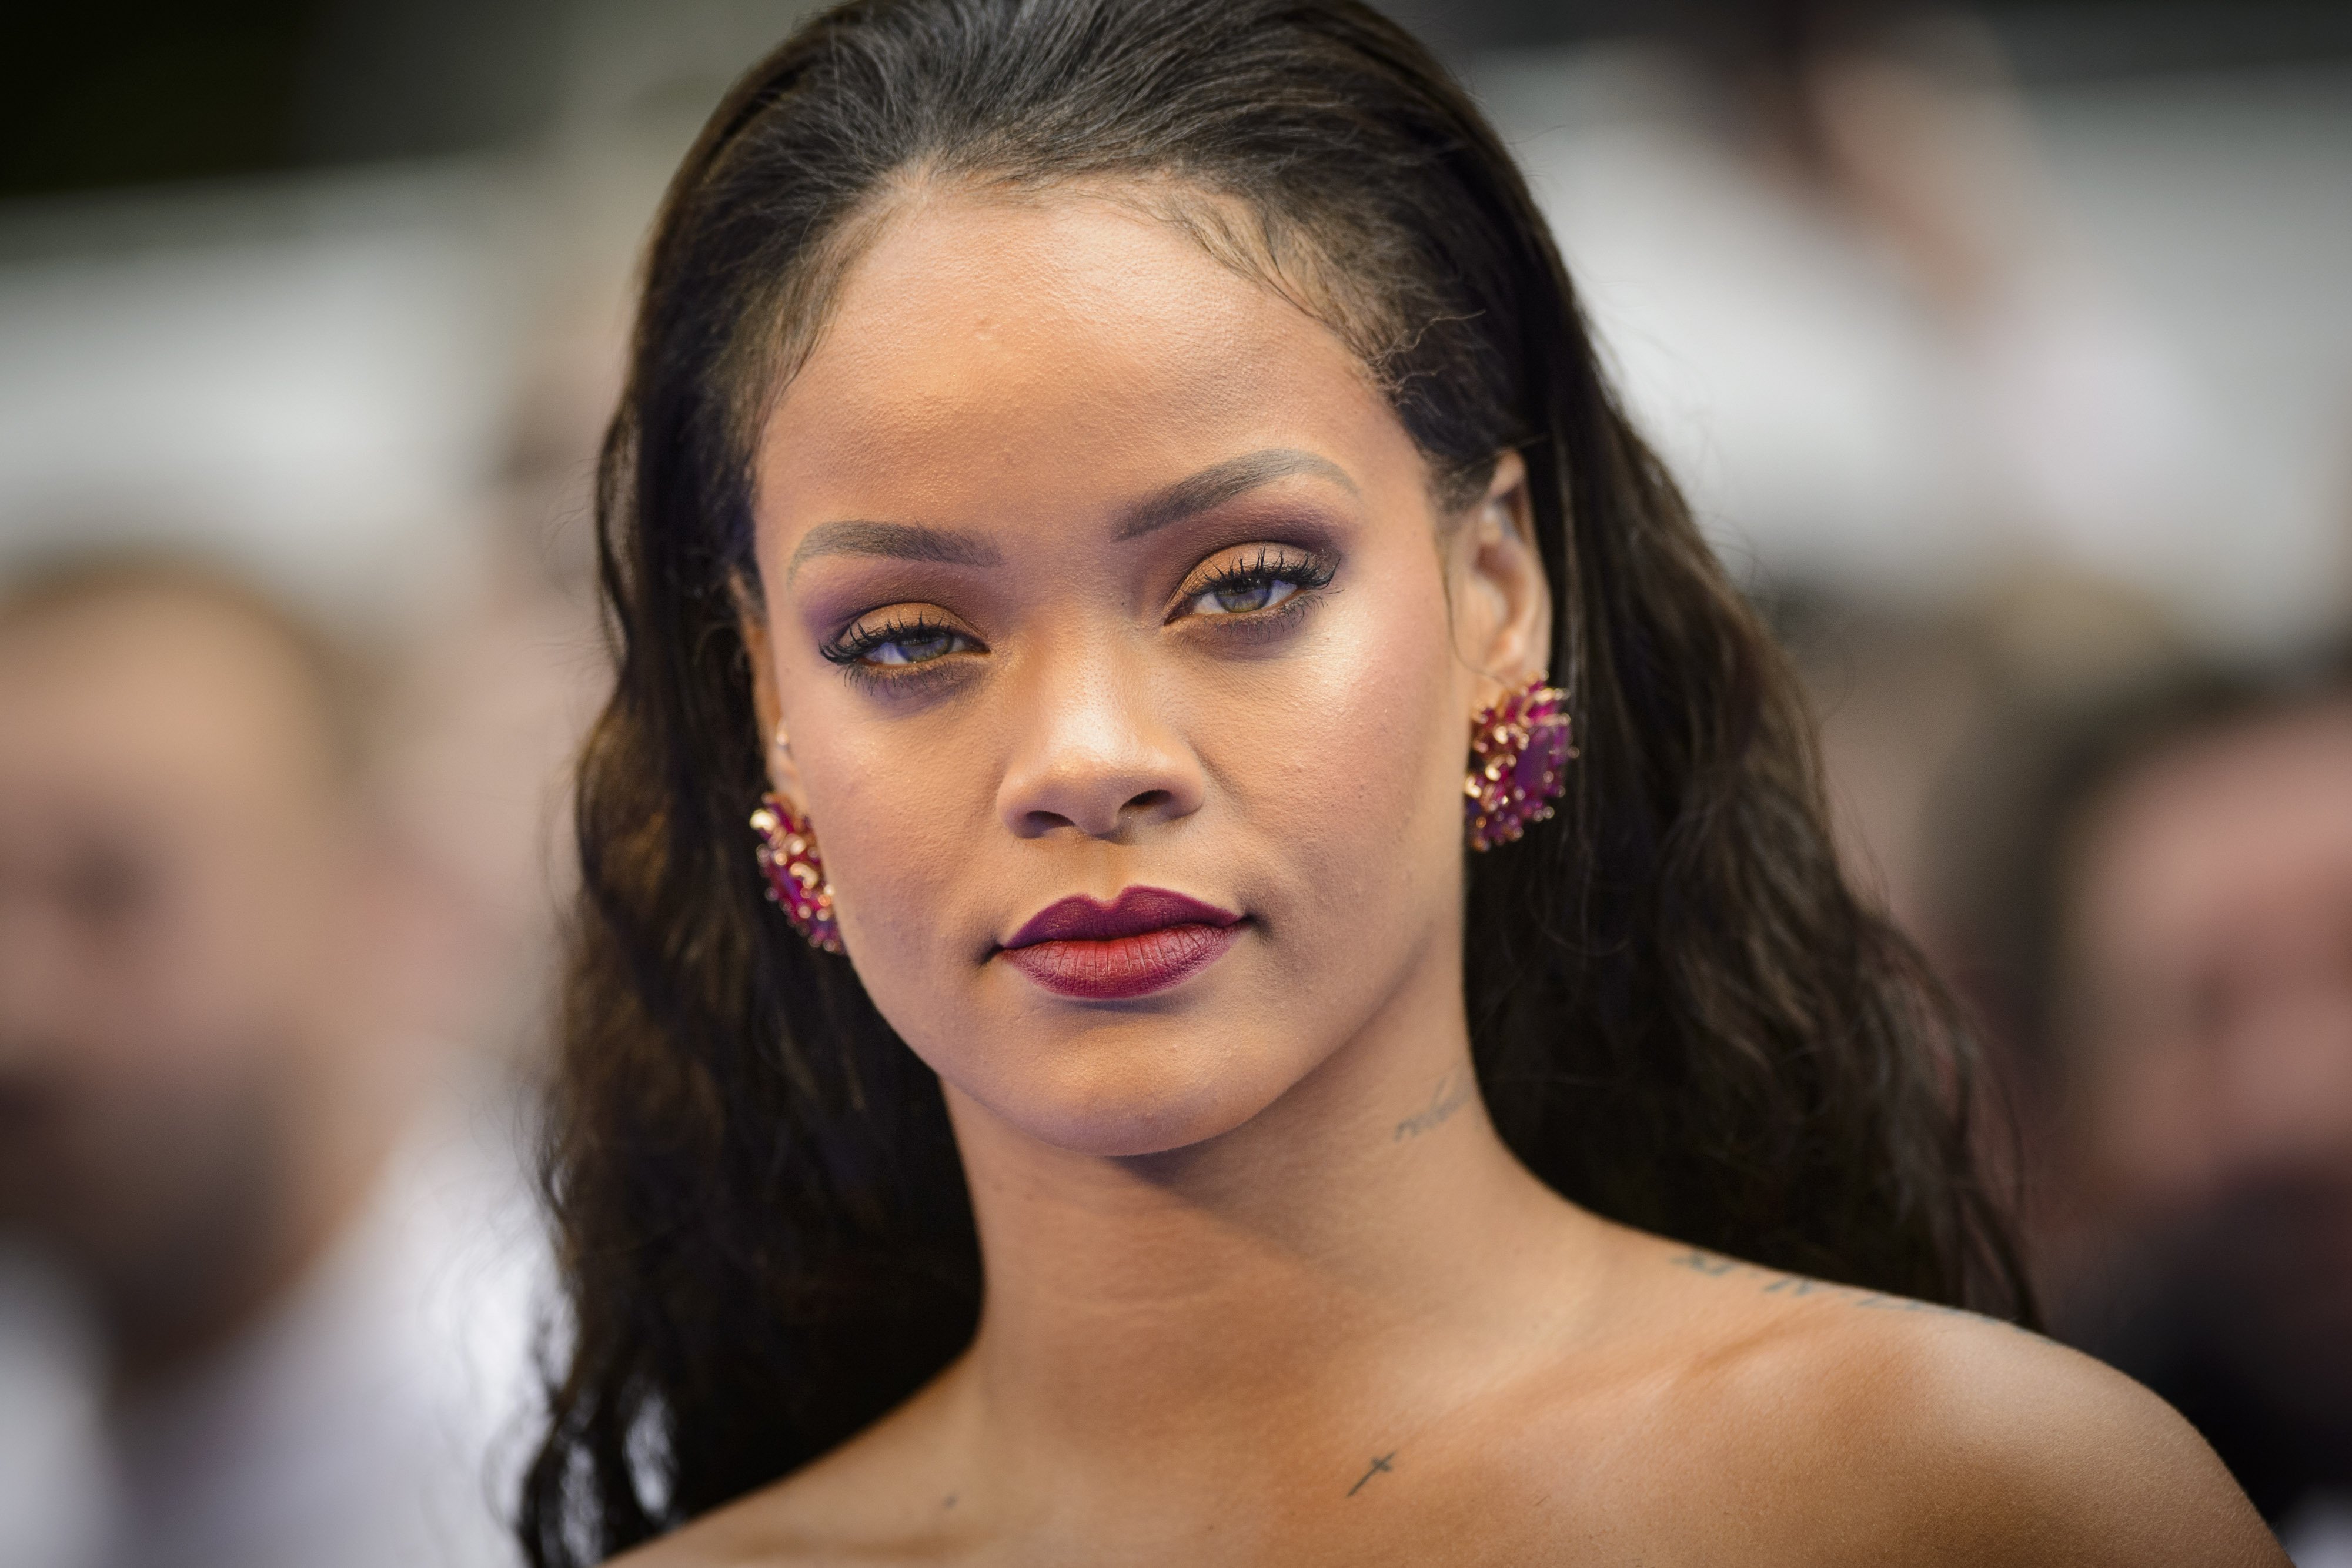 La impactante foto inédita de Rihanna antes de ser famosa: “Parece otra persona”